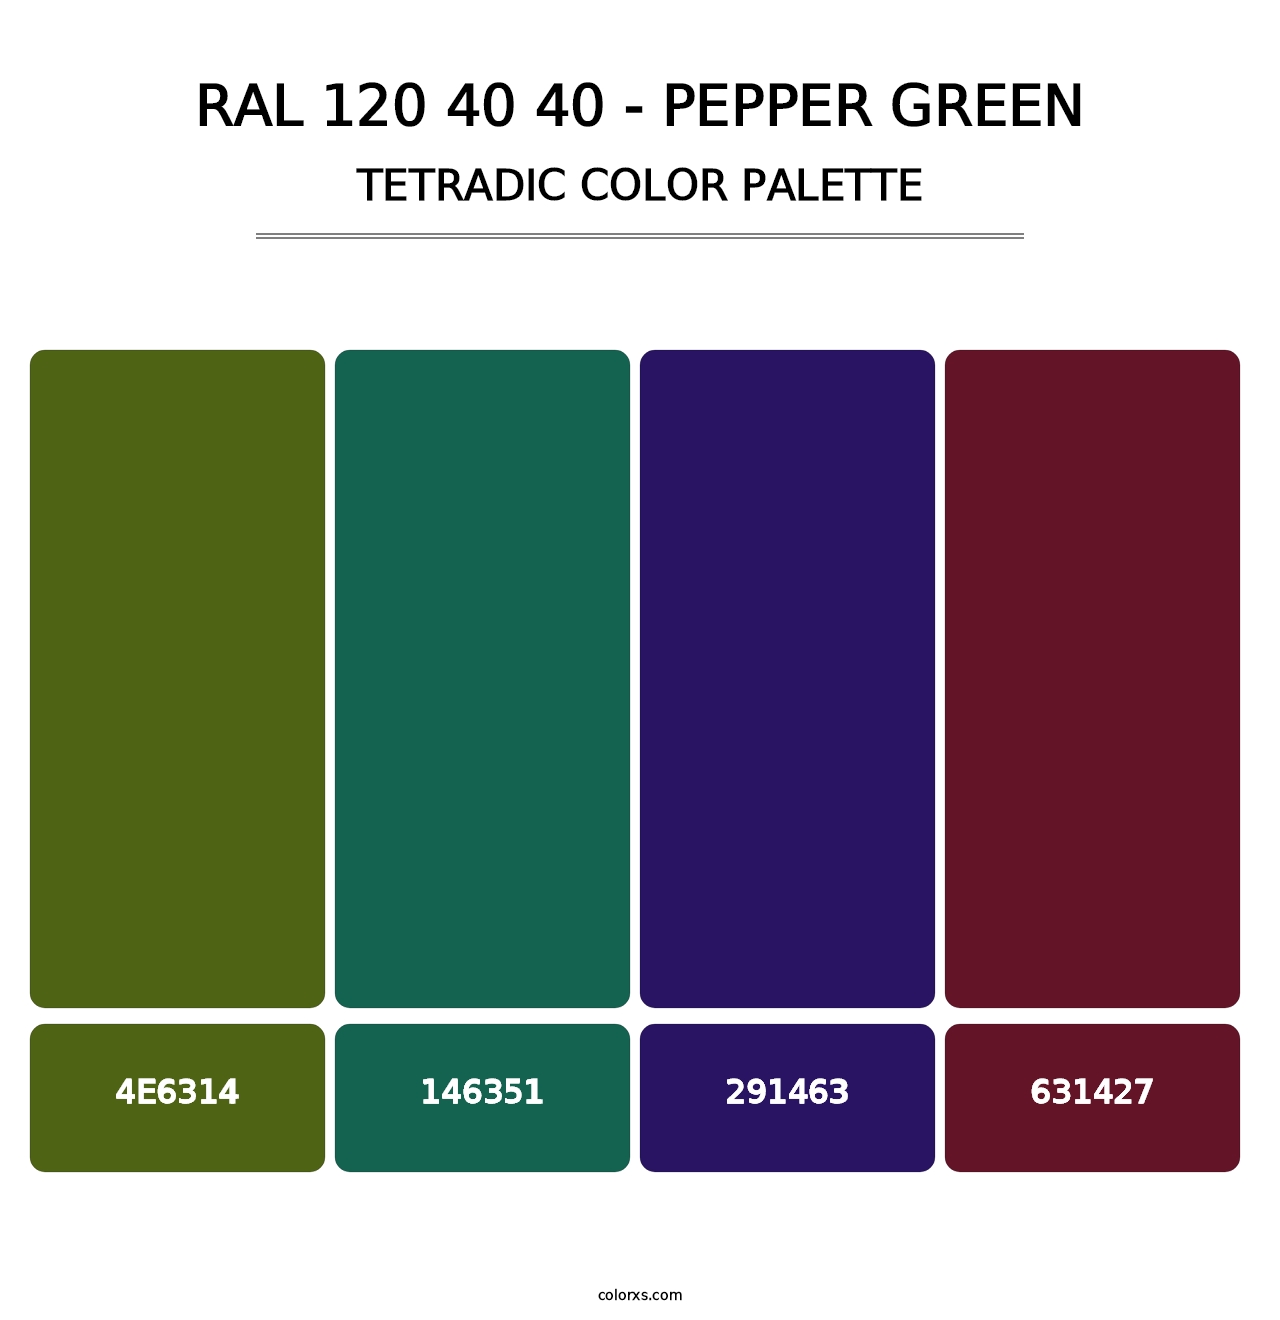 RAL 120 40 40 - Pepper Green - Tetradic Color Palette